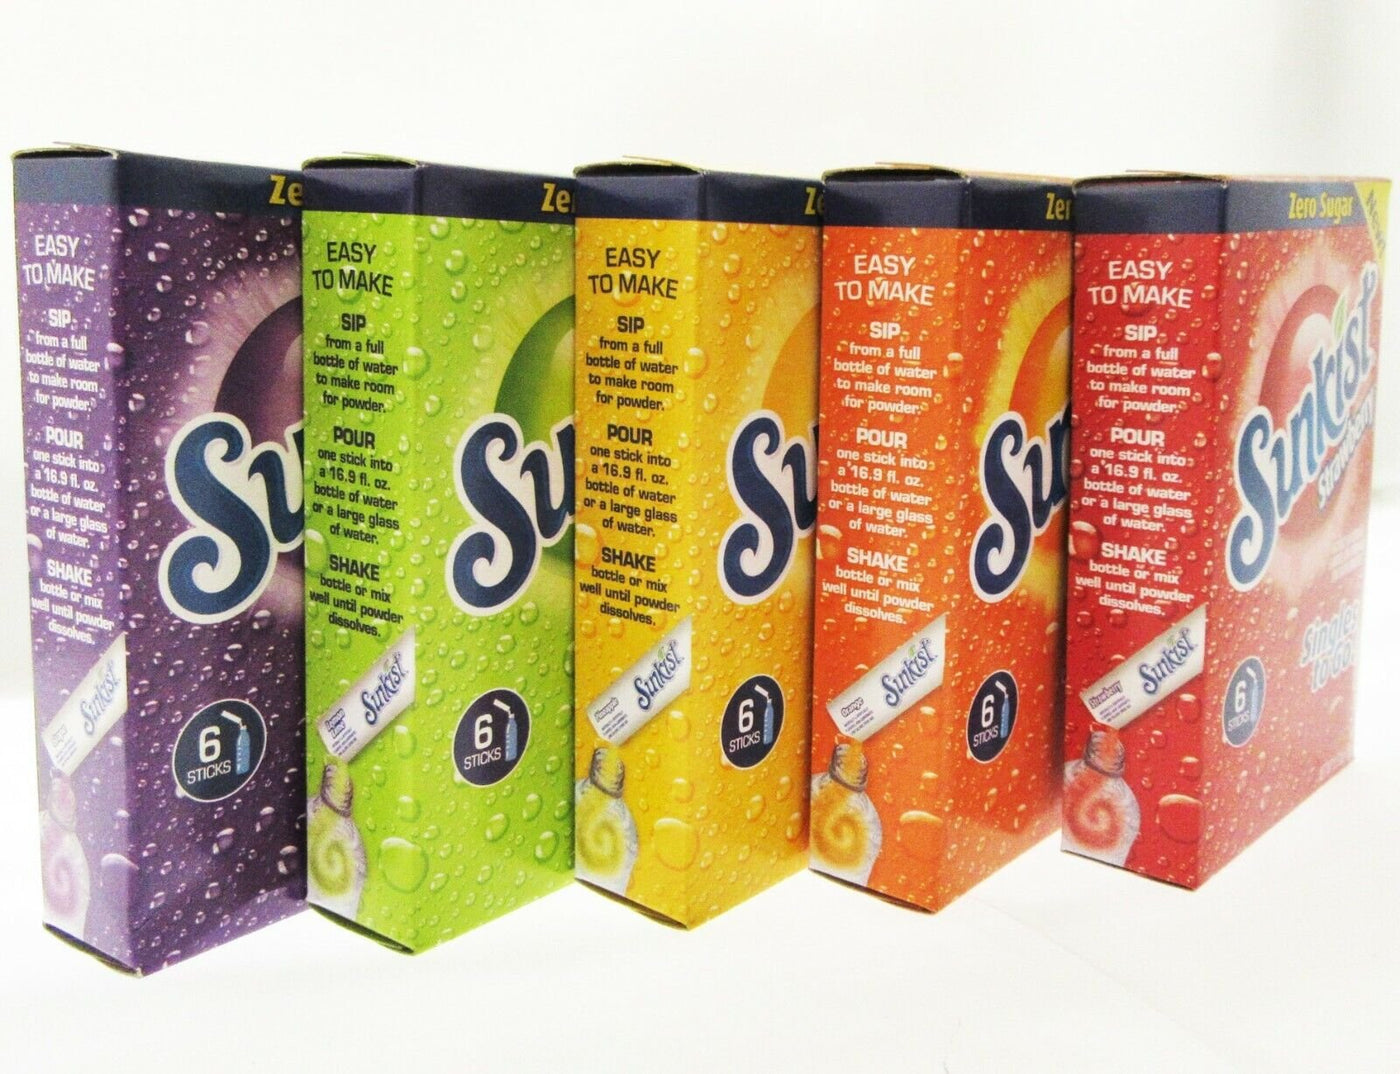 NEW! Sunkist ~ 6 Packets ~ Zero Sugar Free ~ Drink Mix ~ 5 Boxes